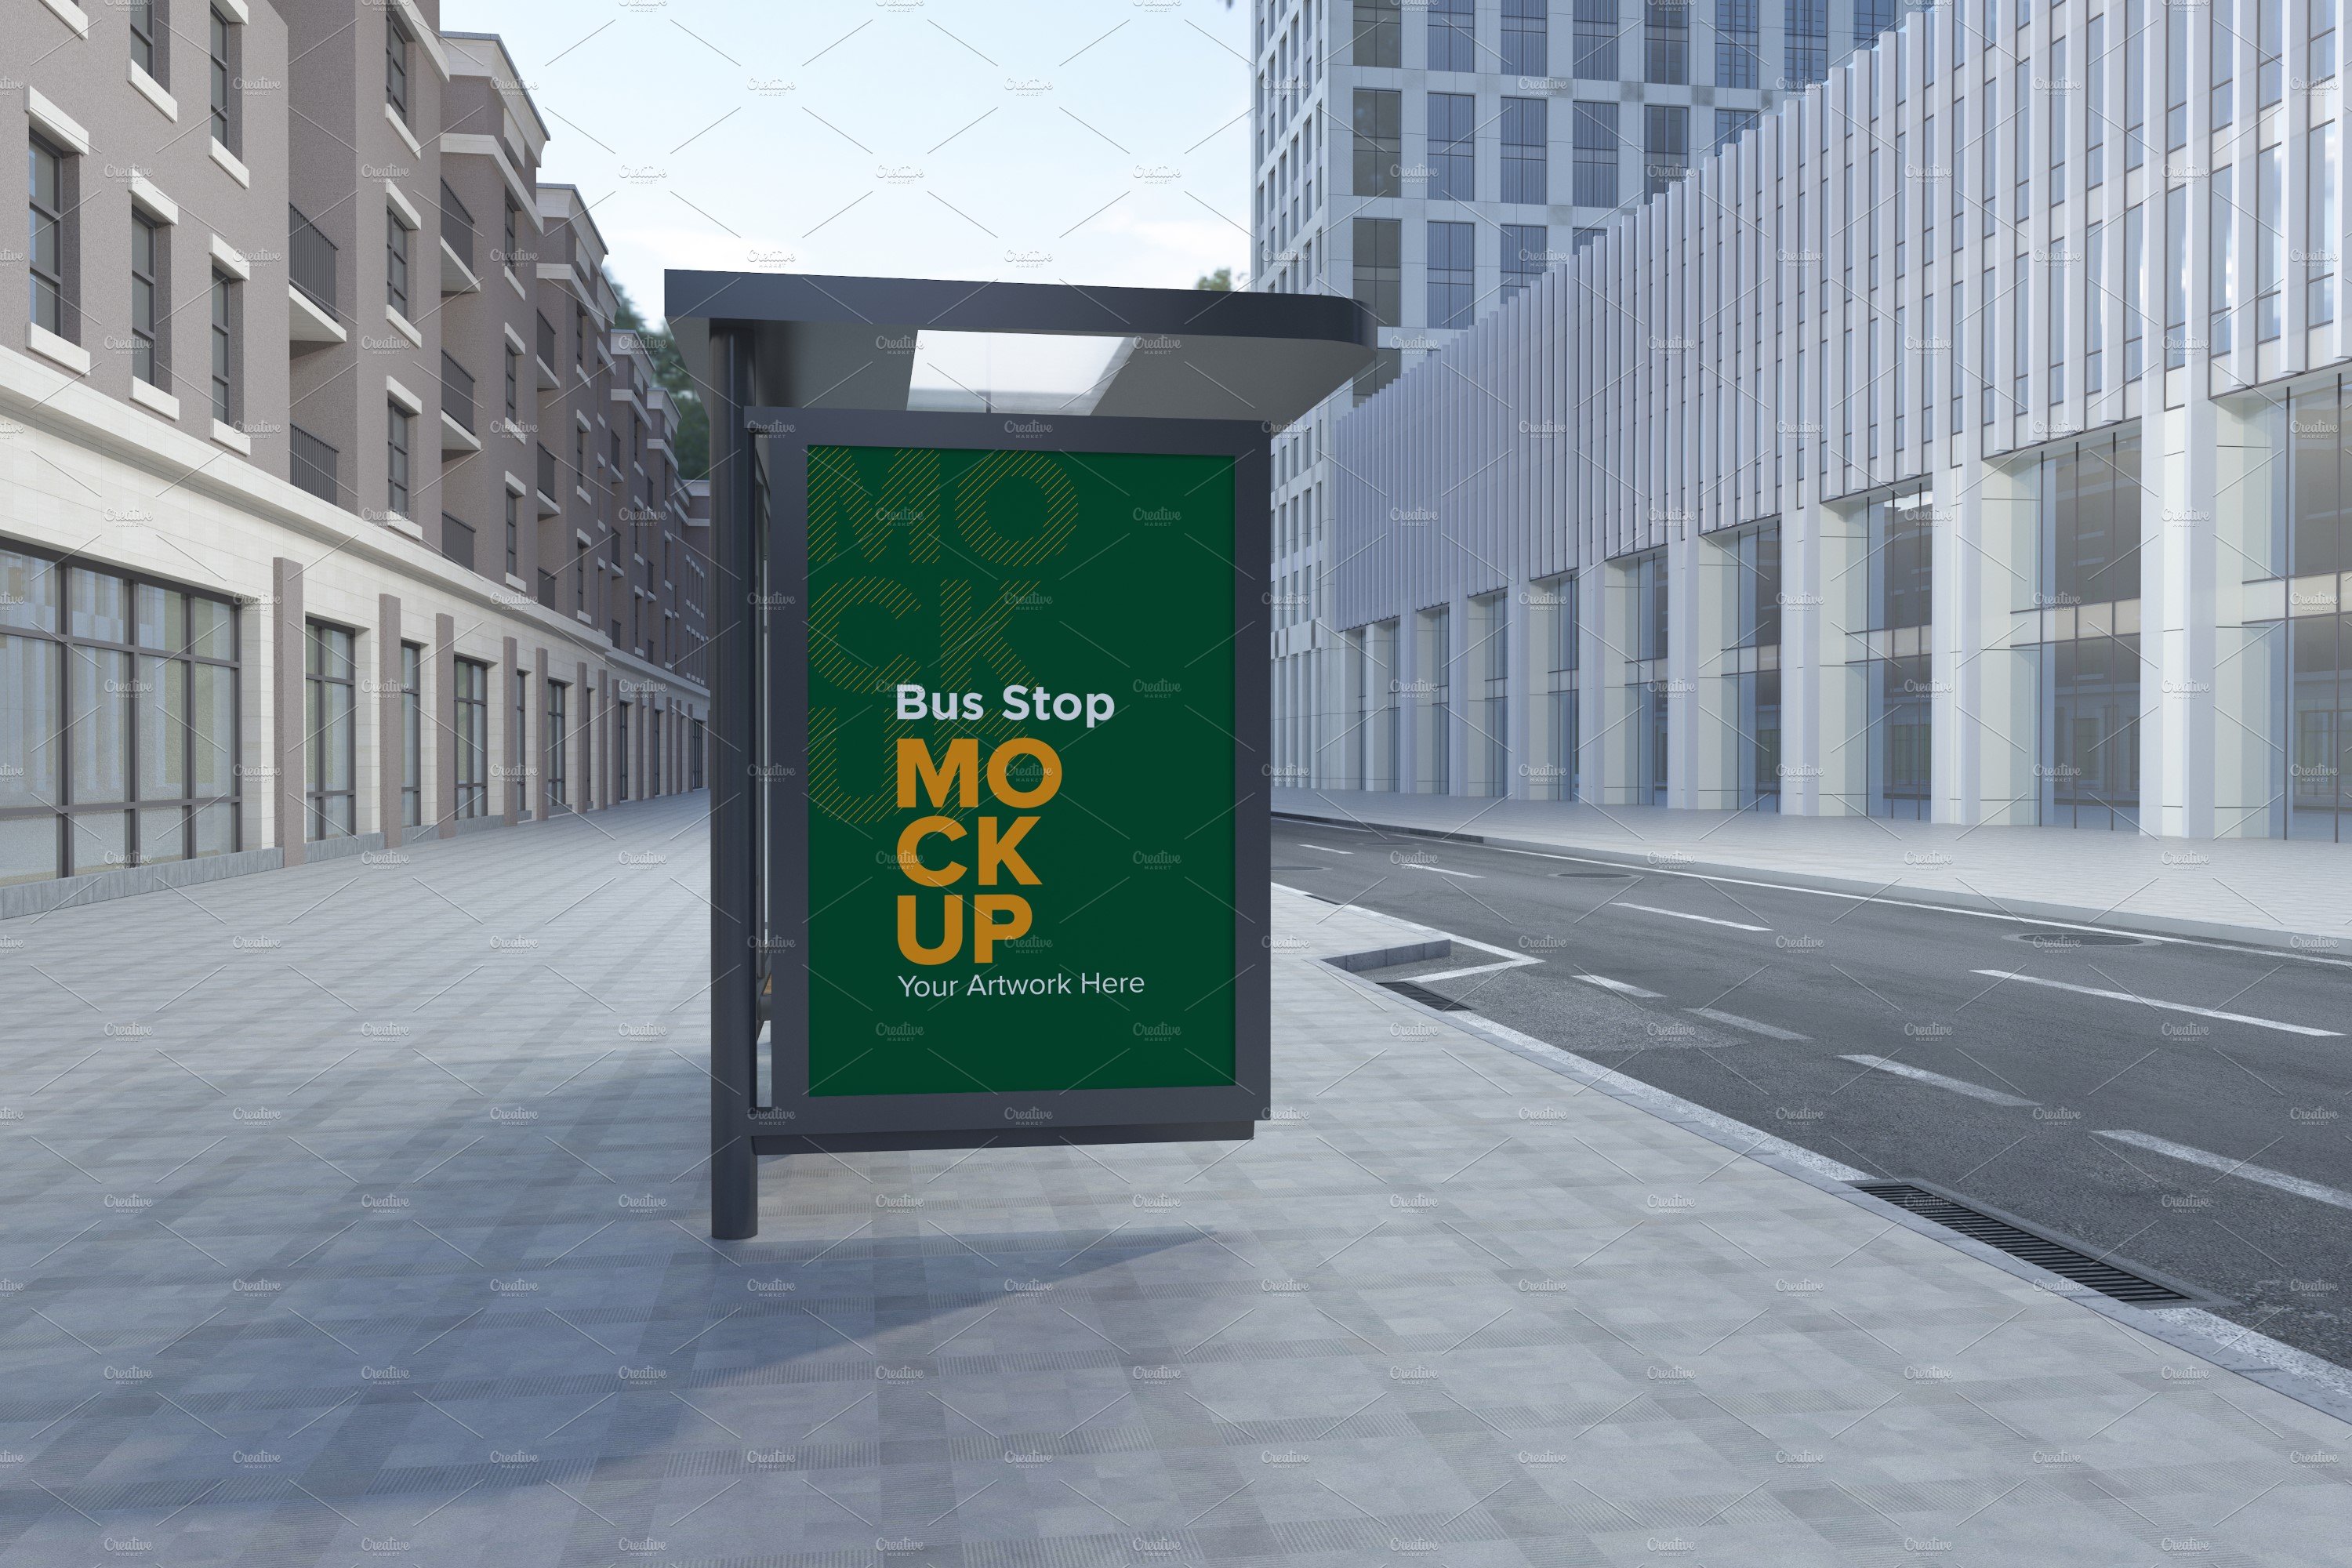 Bus Stop Billboard Mockup cover image.